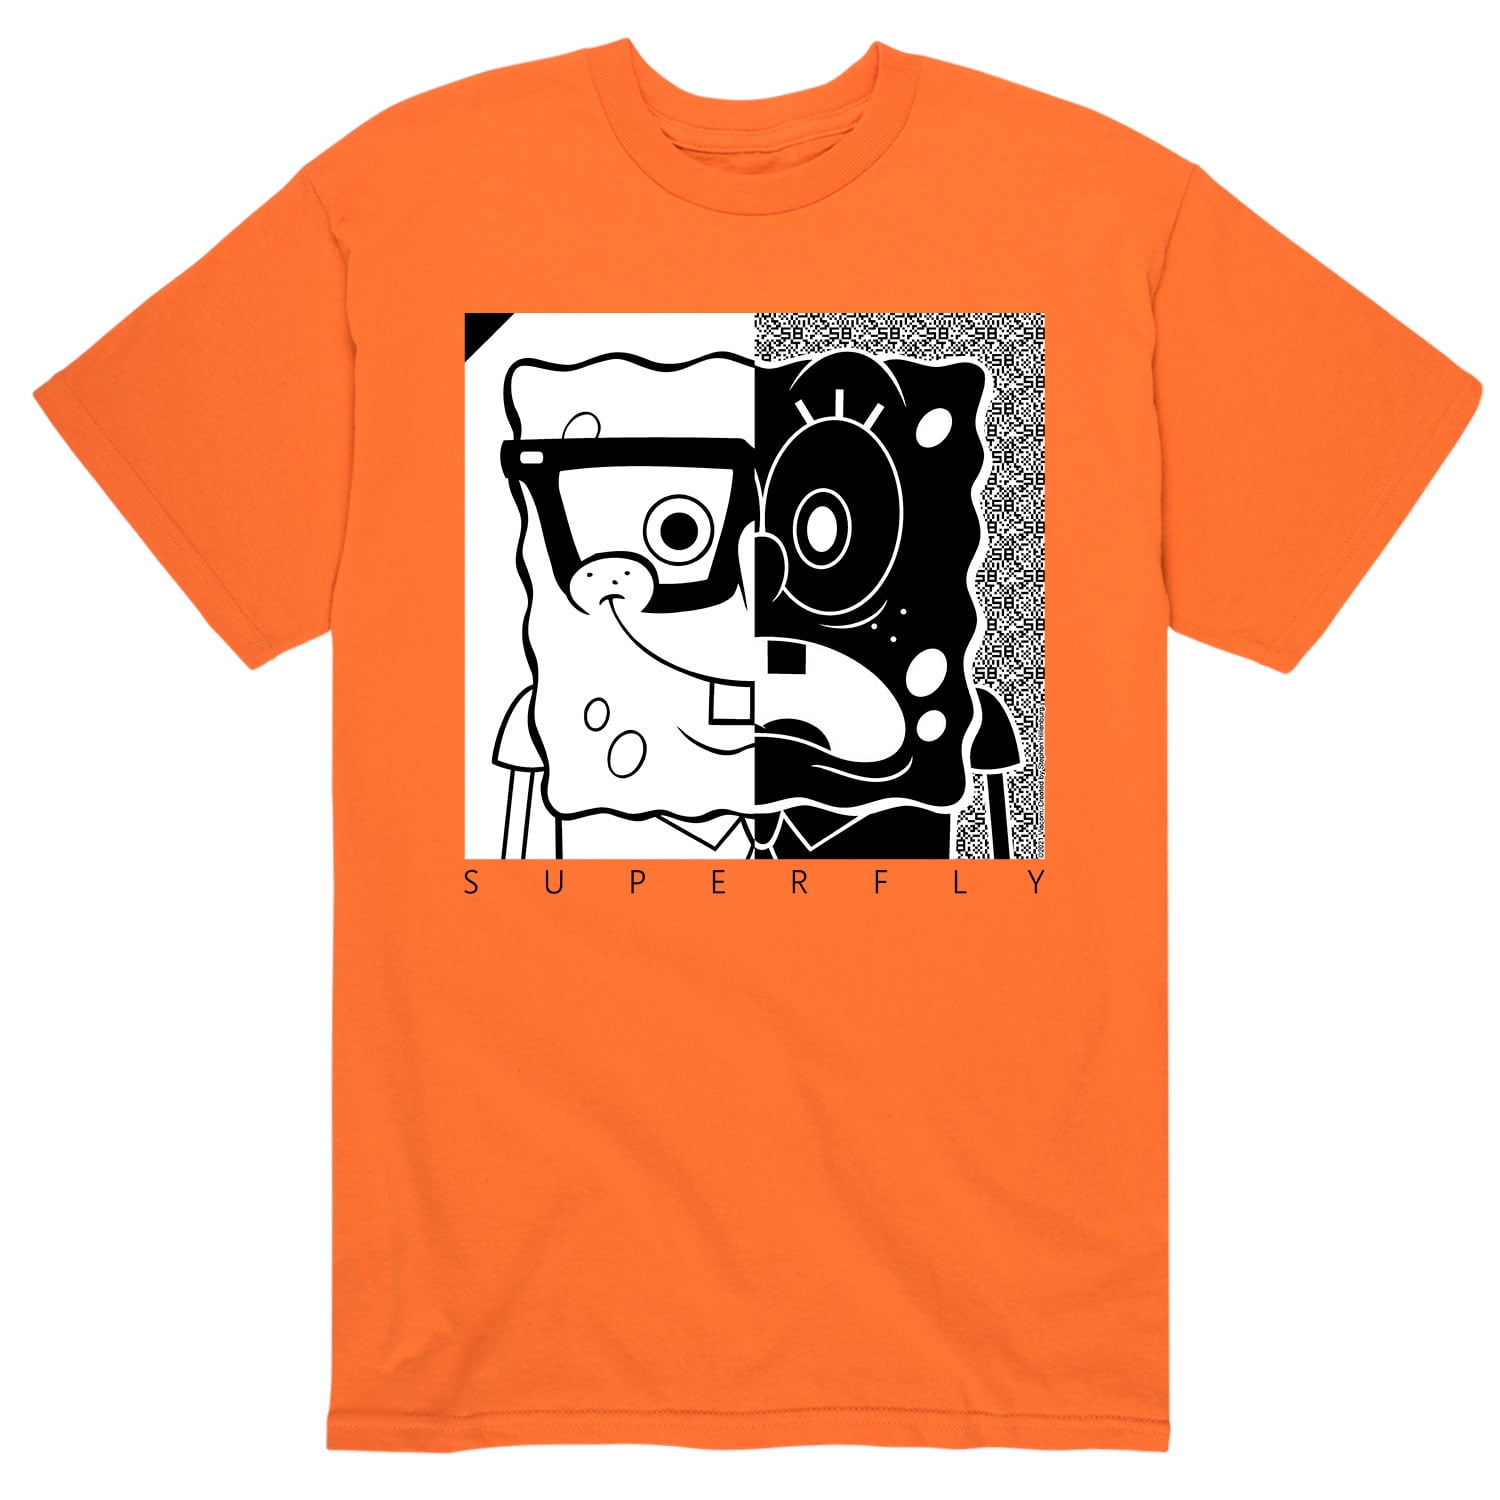 SpongeBob SquarePants - Superfly - Men's Short Sleeve Graphic T-Shirt ...